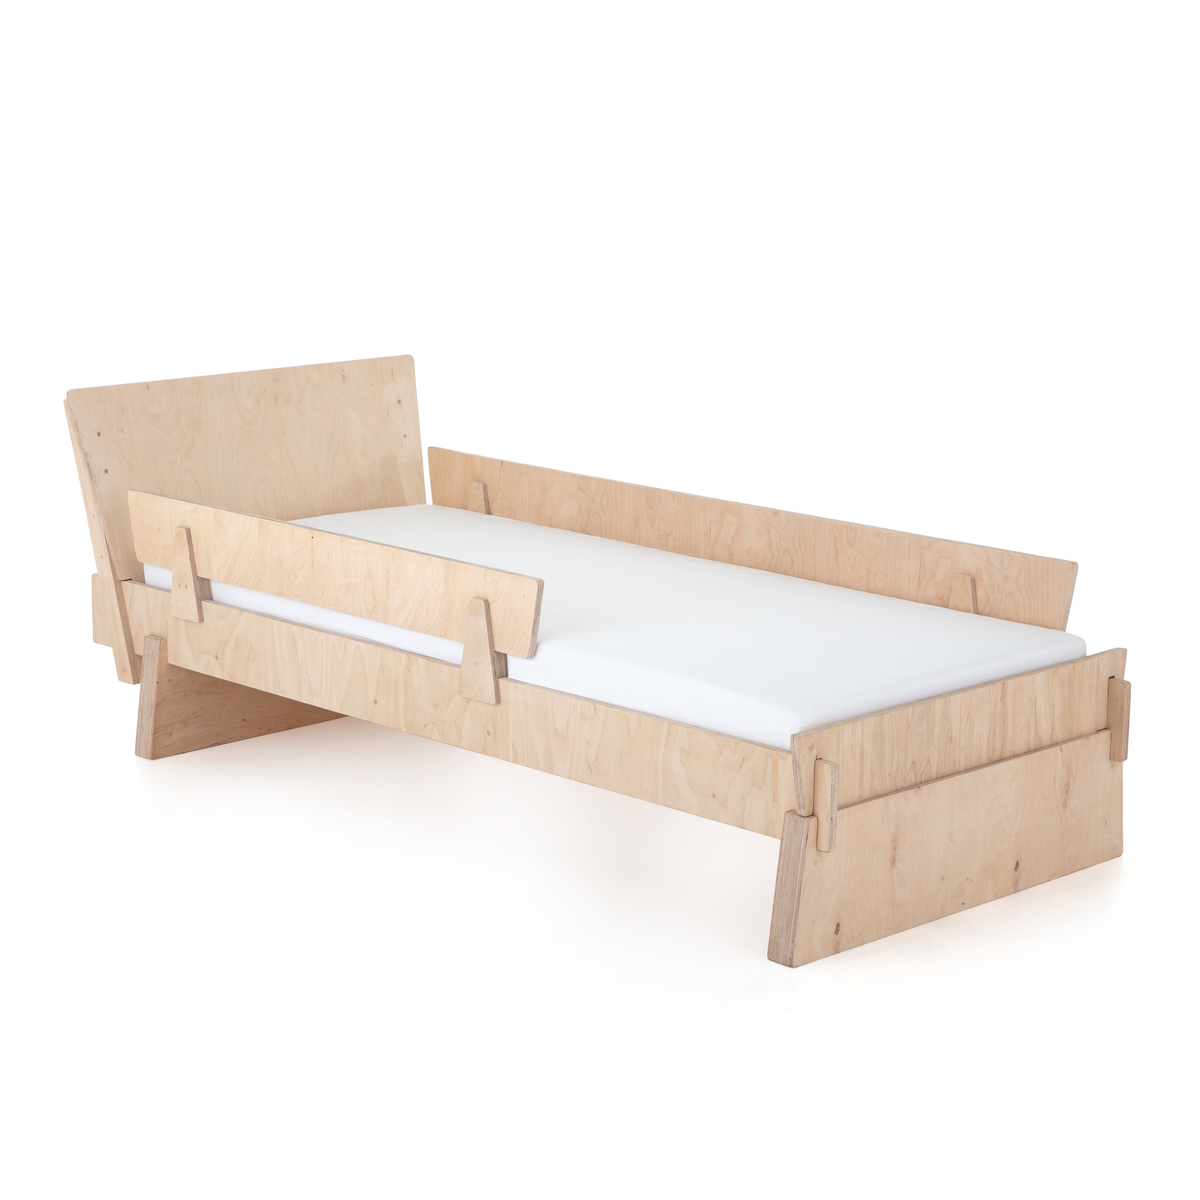 Kinderbett TEN DEGREE - natur - Bett + skrupel Bett 180x80 cm